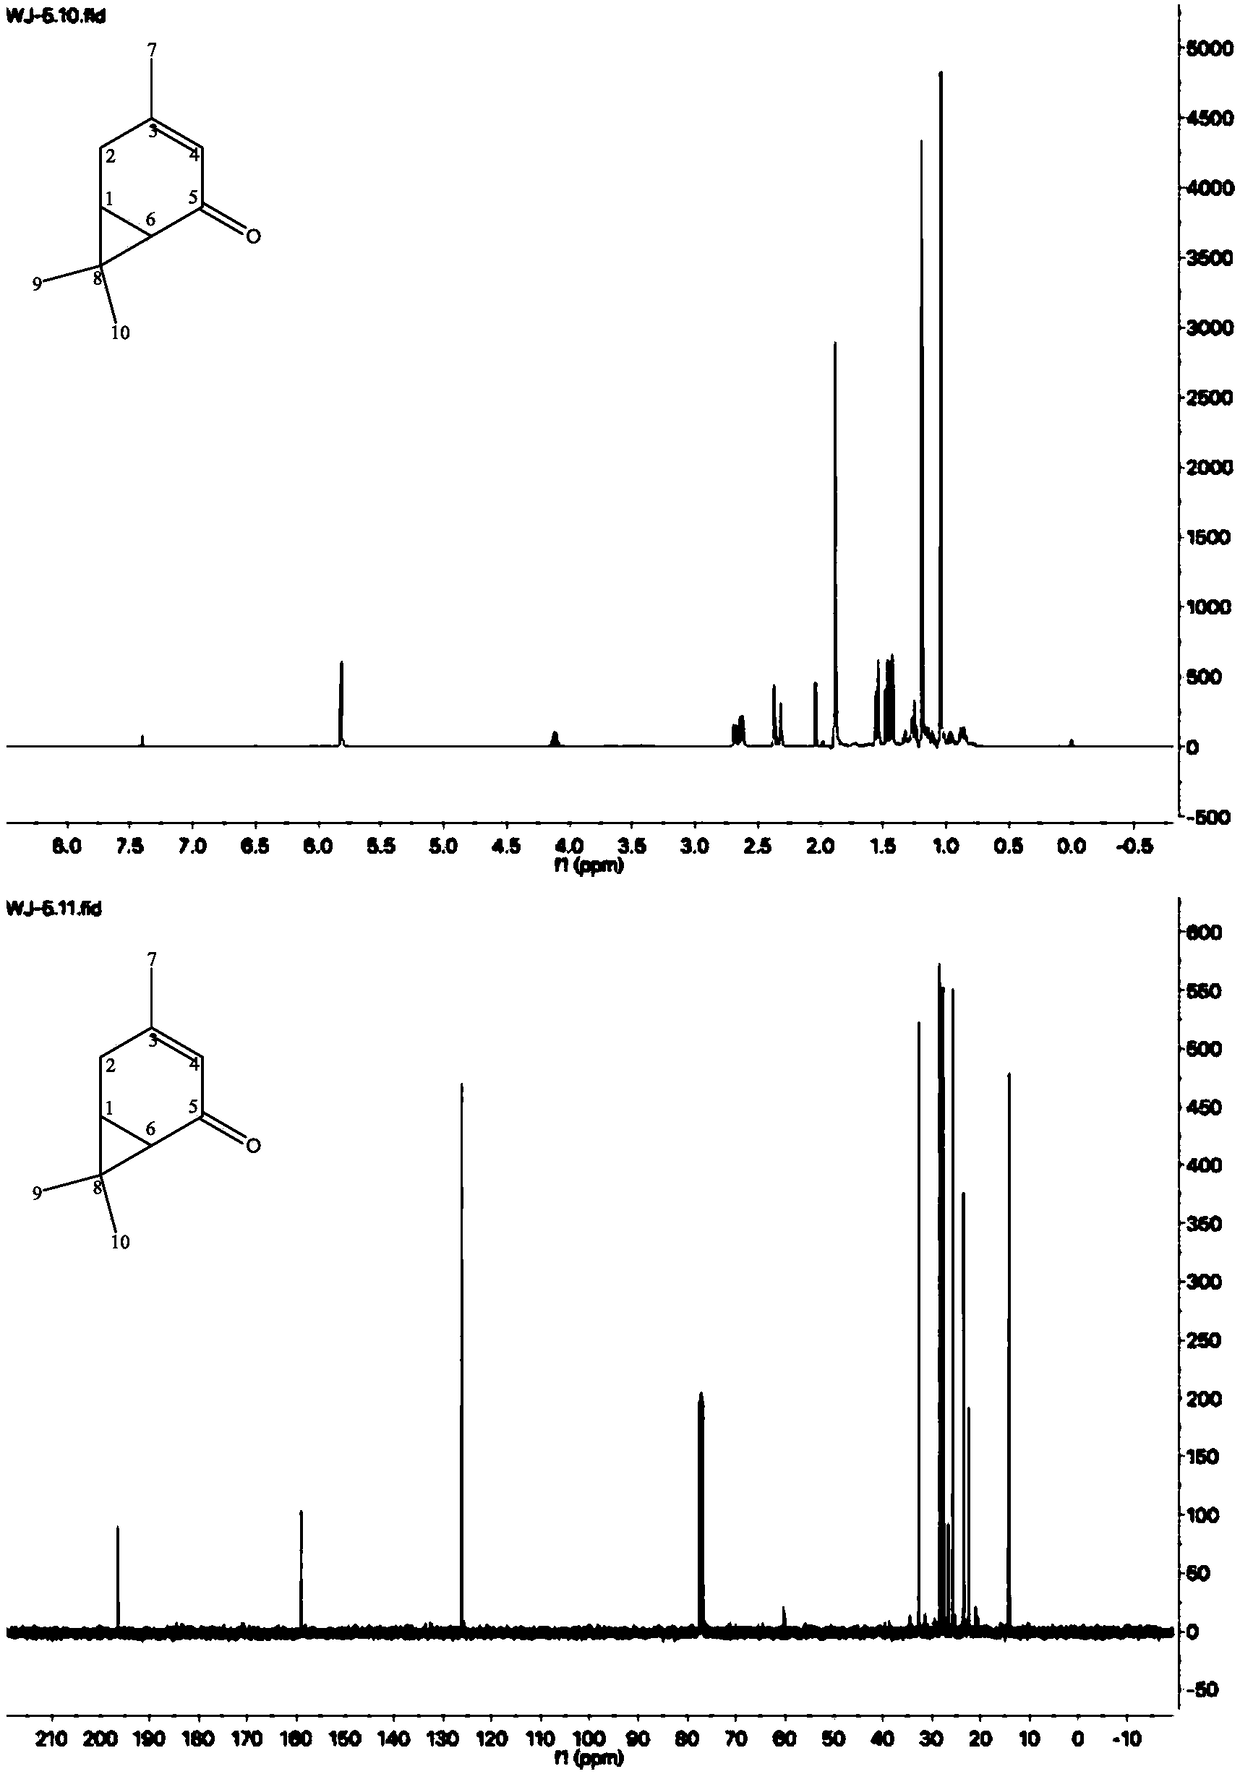 Method of preparing 3-isopropyl-5-cresol and carvacrol with 3-carene